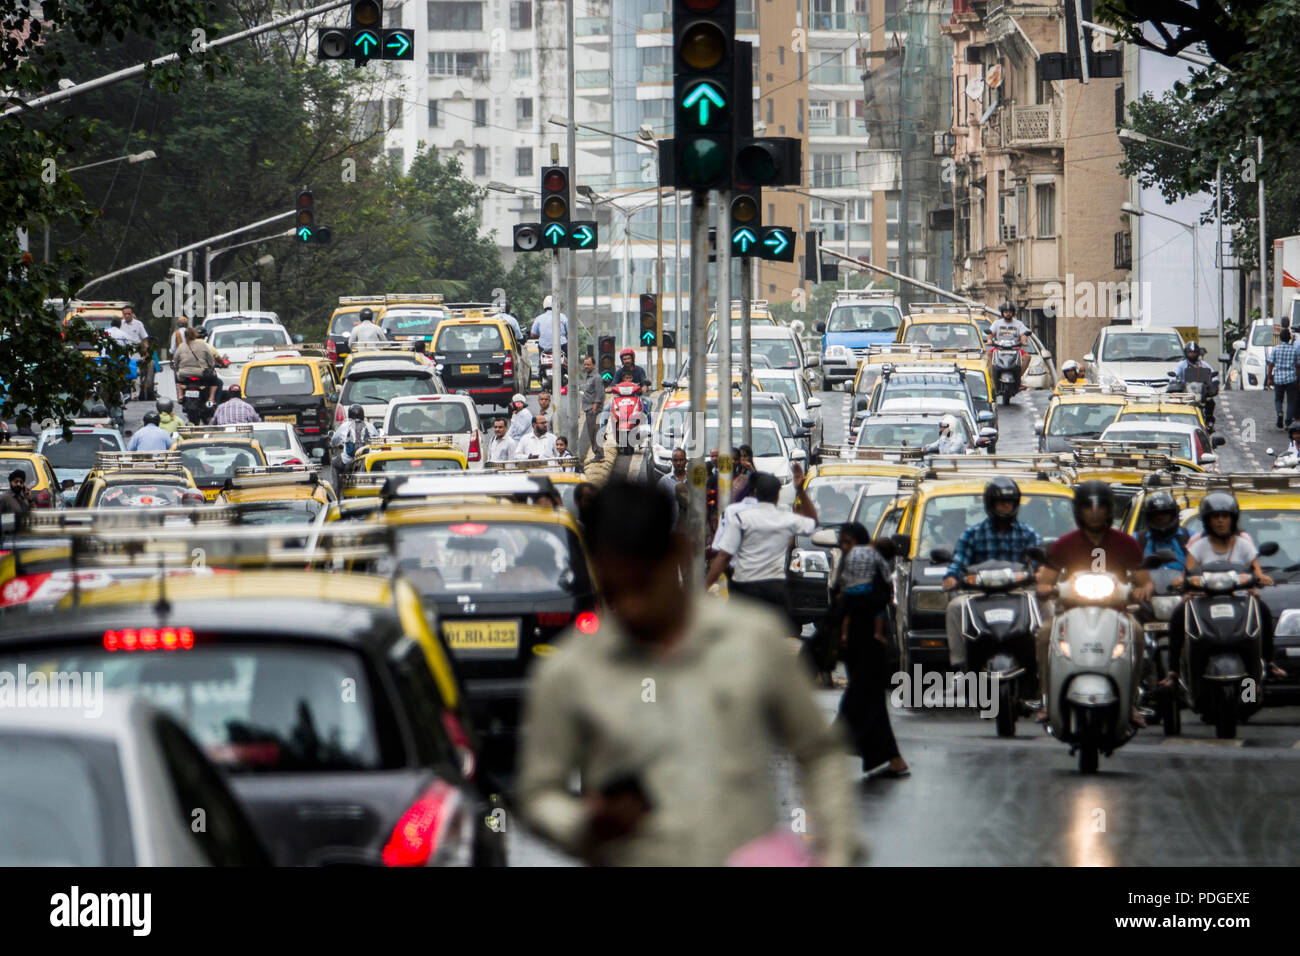 Busy traffic street scene in Kamathipura, Mumbai, Maharashtra, India Stock Photo